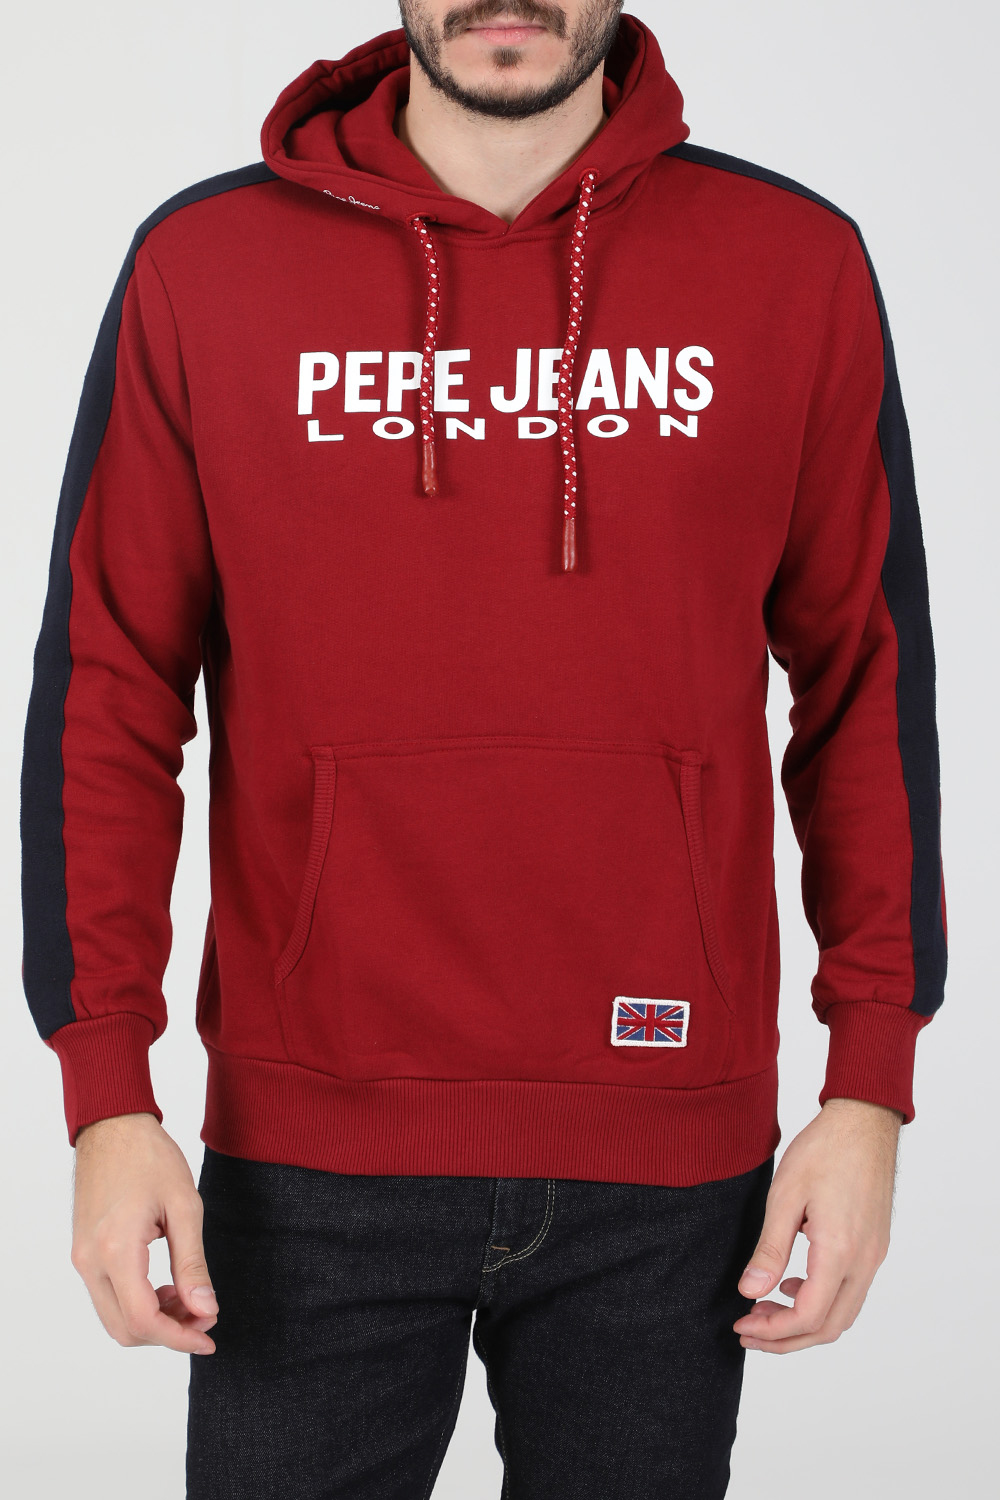 PEPE JEANS - Ανδρική φούτερ μπλούζα PEPE JEANS ANDRE κόκκινη